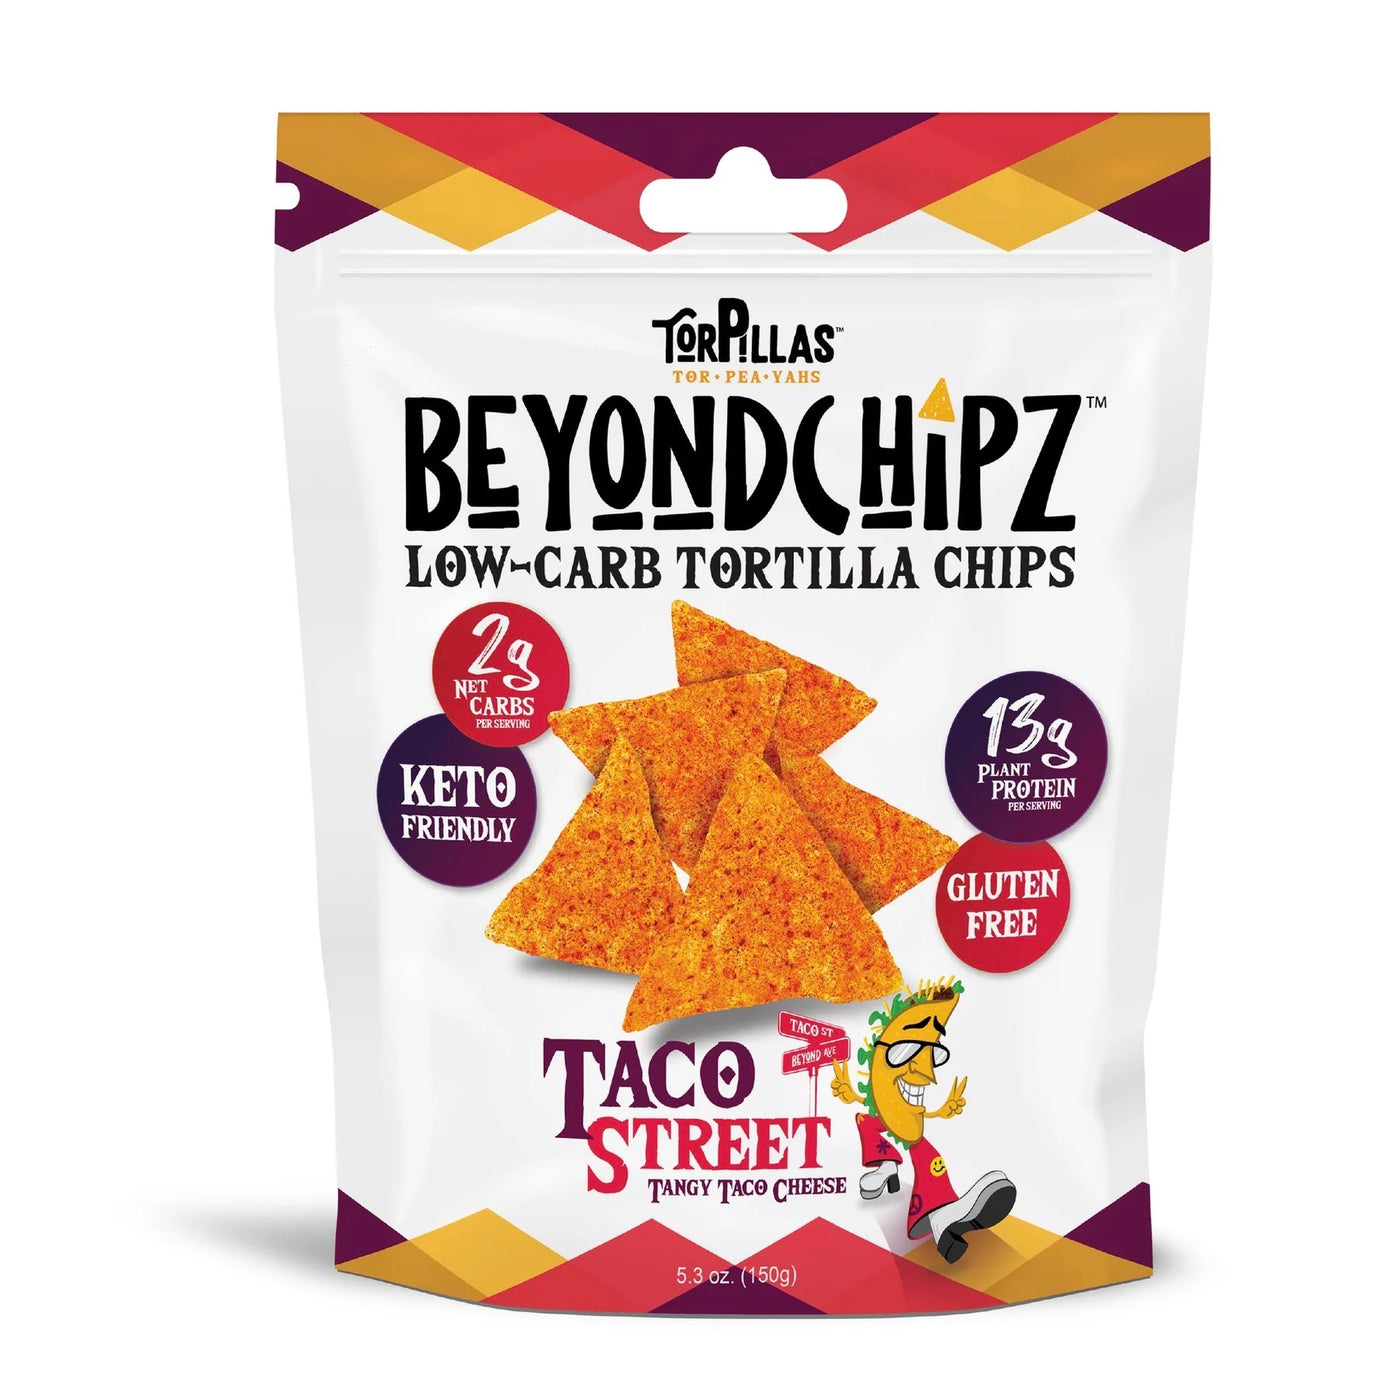 Beyond Chipz Torpillas (many flavours)